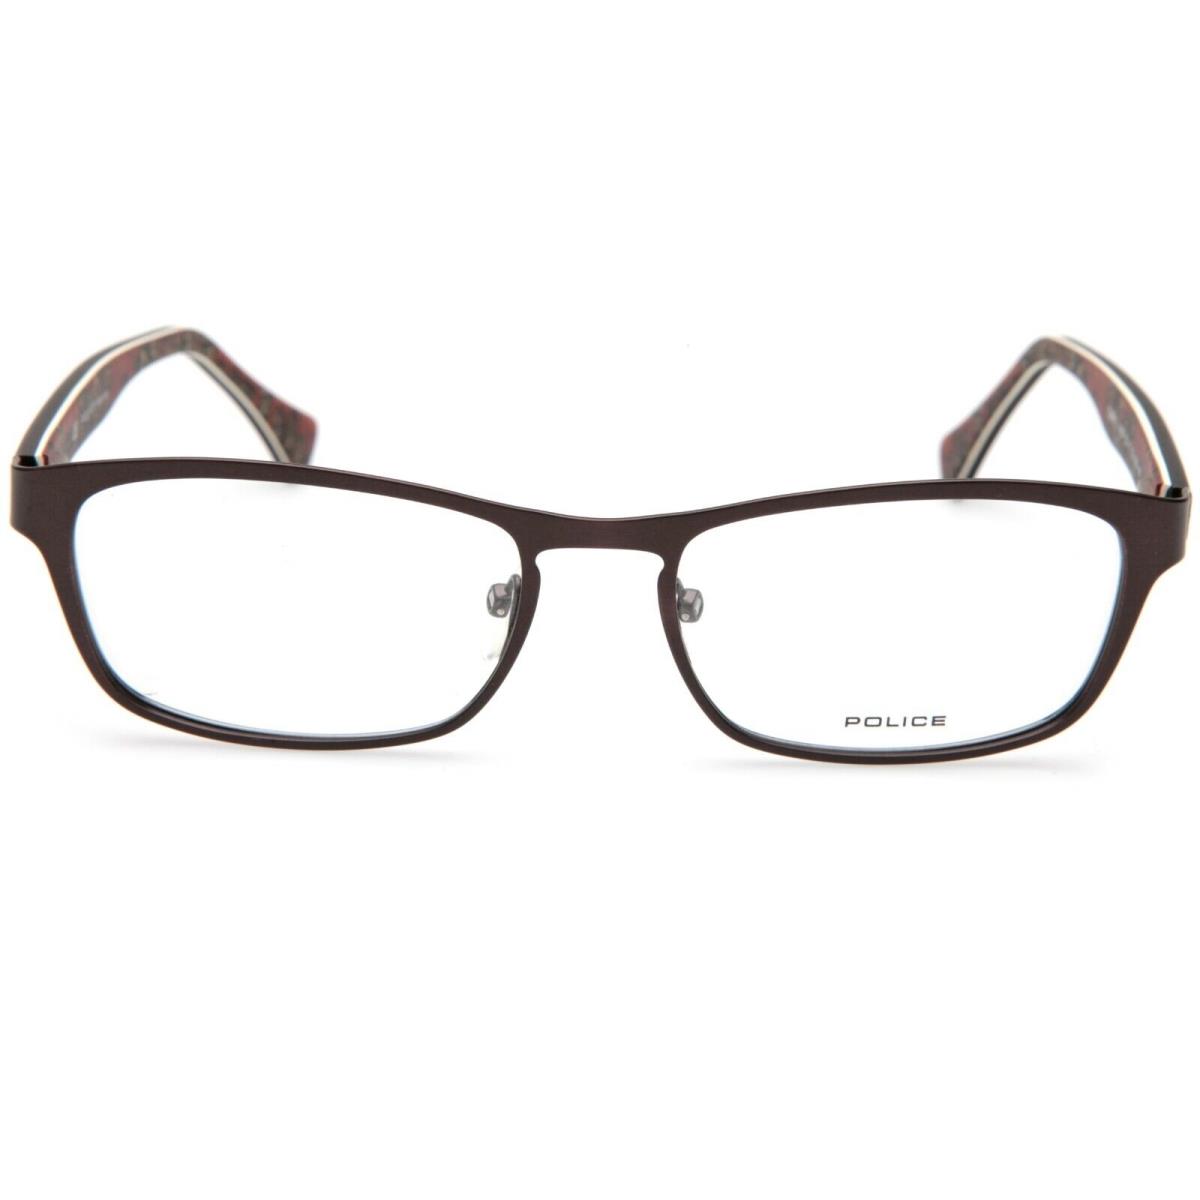 Police eyeglasses  - Frame: Black 0